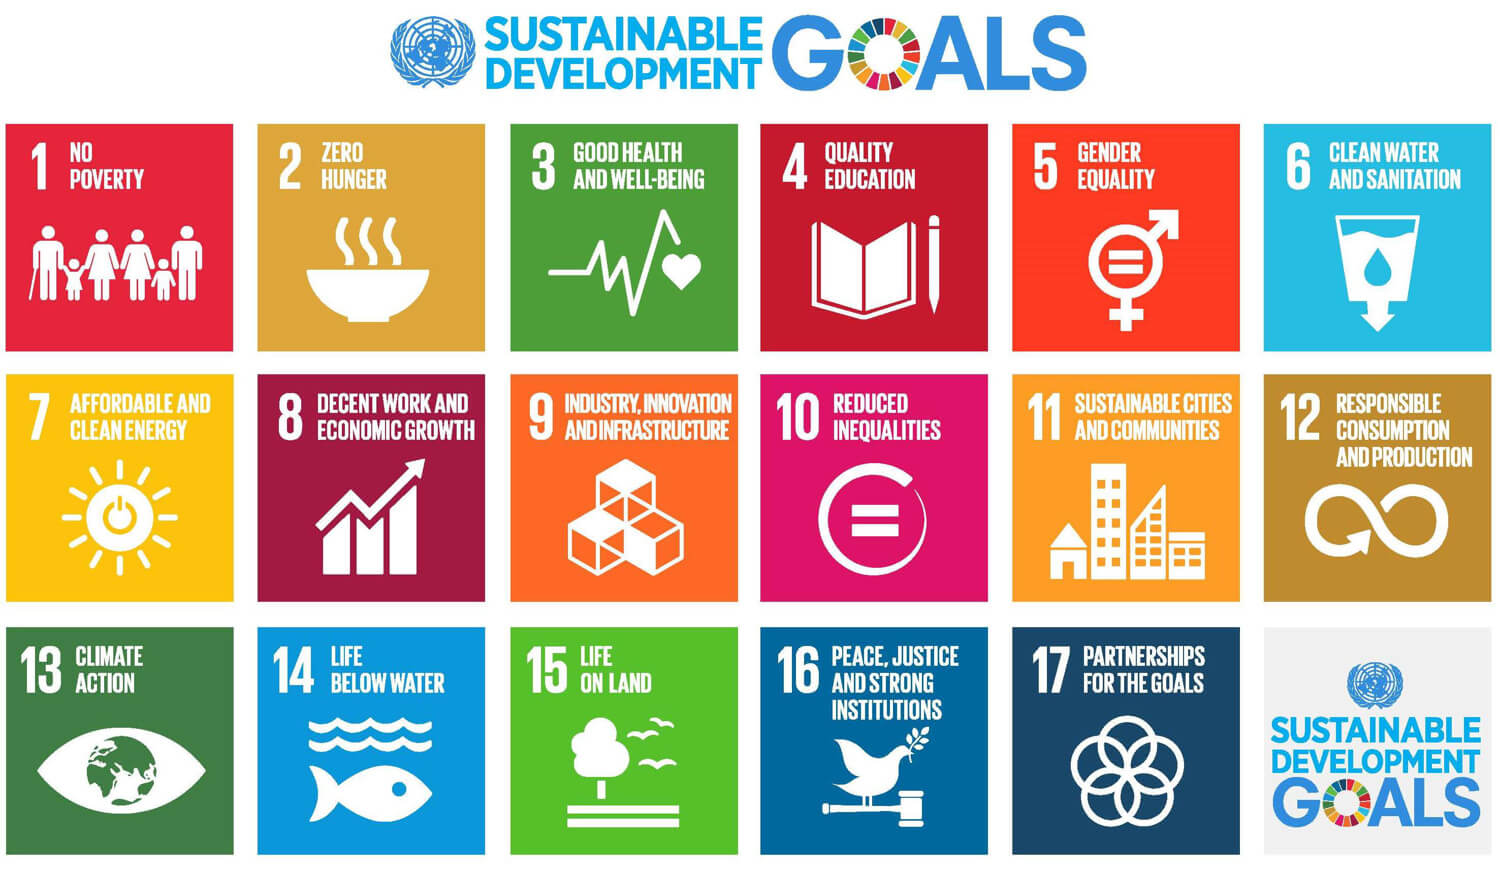 UN Sustainable Development Goals directly relevant to Australian communities